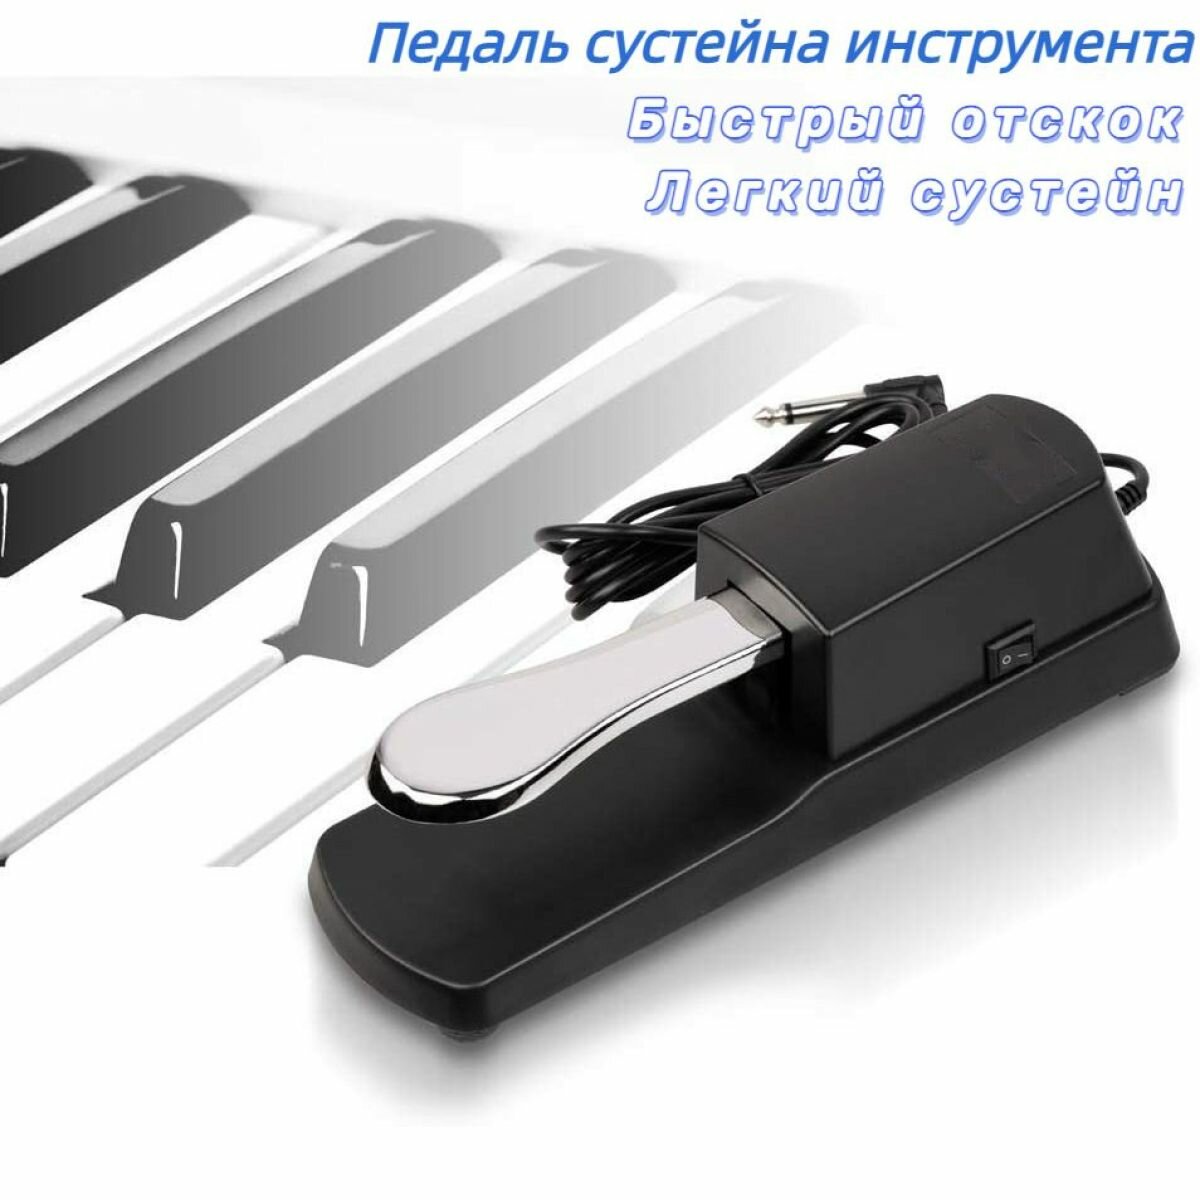 Клавиатура электронный орган педаль сустейна